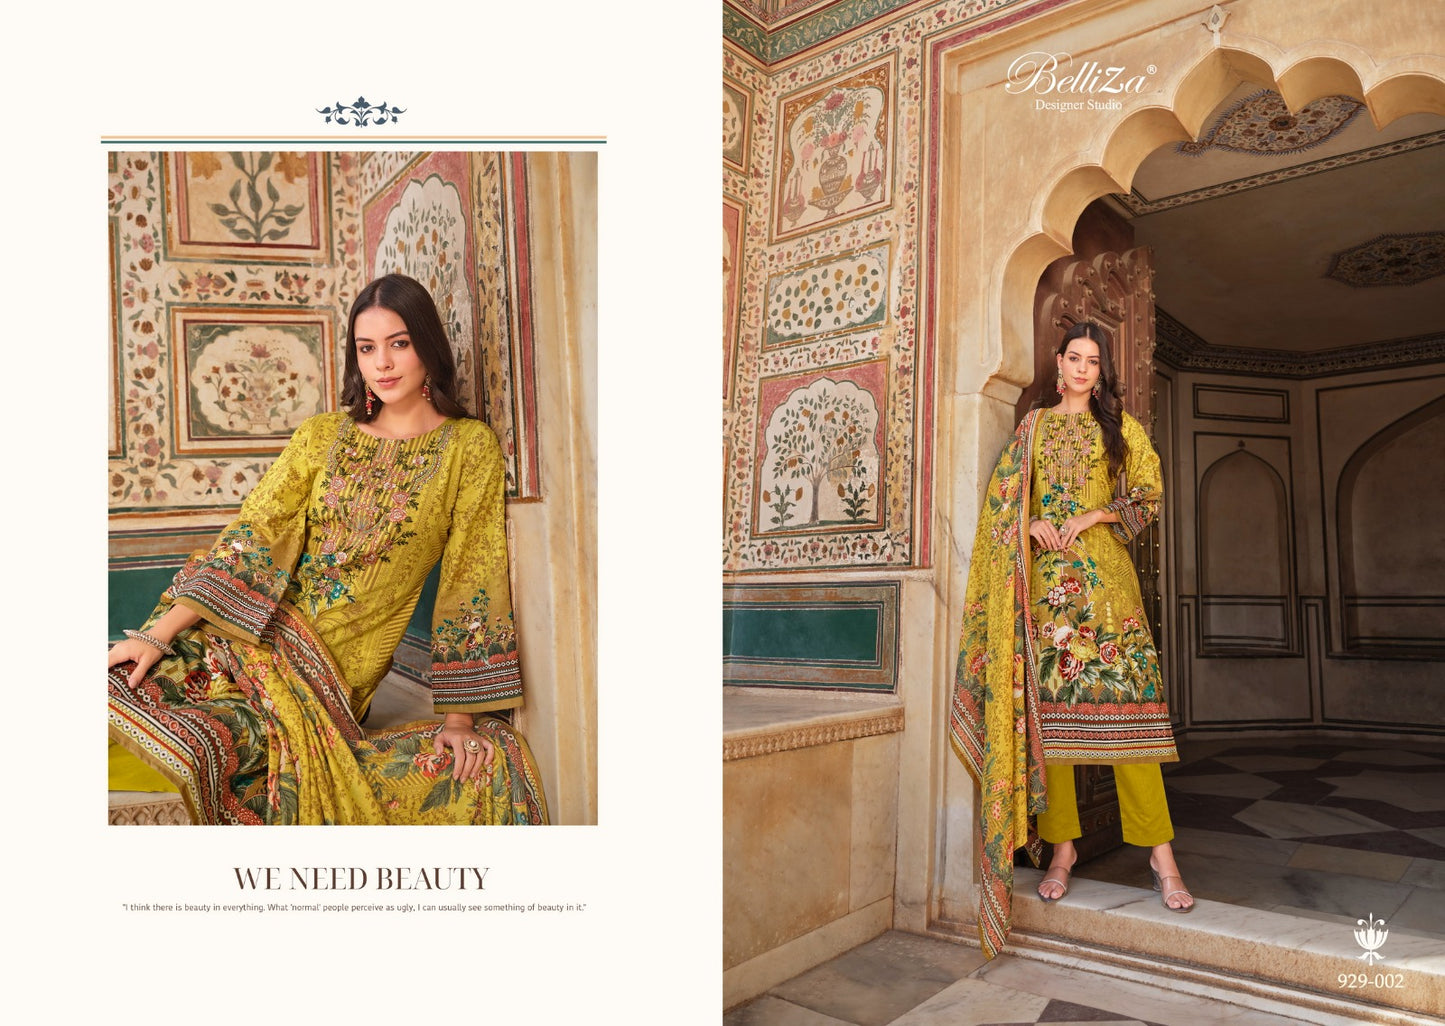 Naira Vol 56 Belliza Designer Studio Cotton Karachi Salwar Suits Wholesale Price